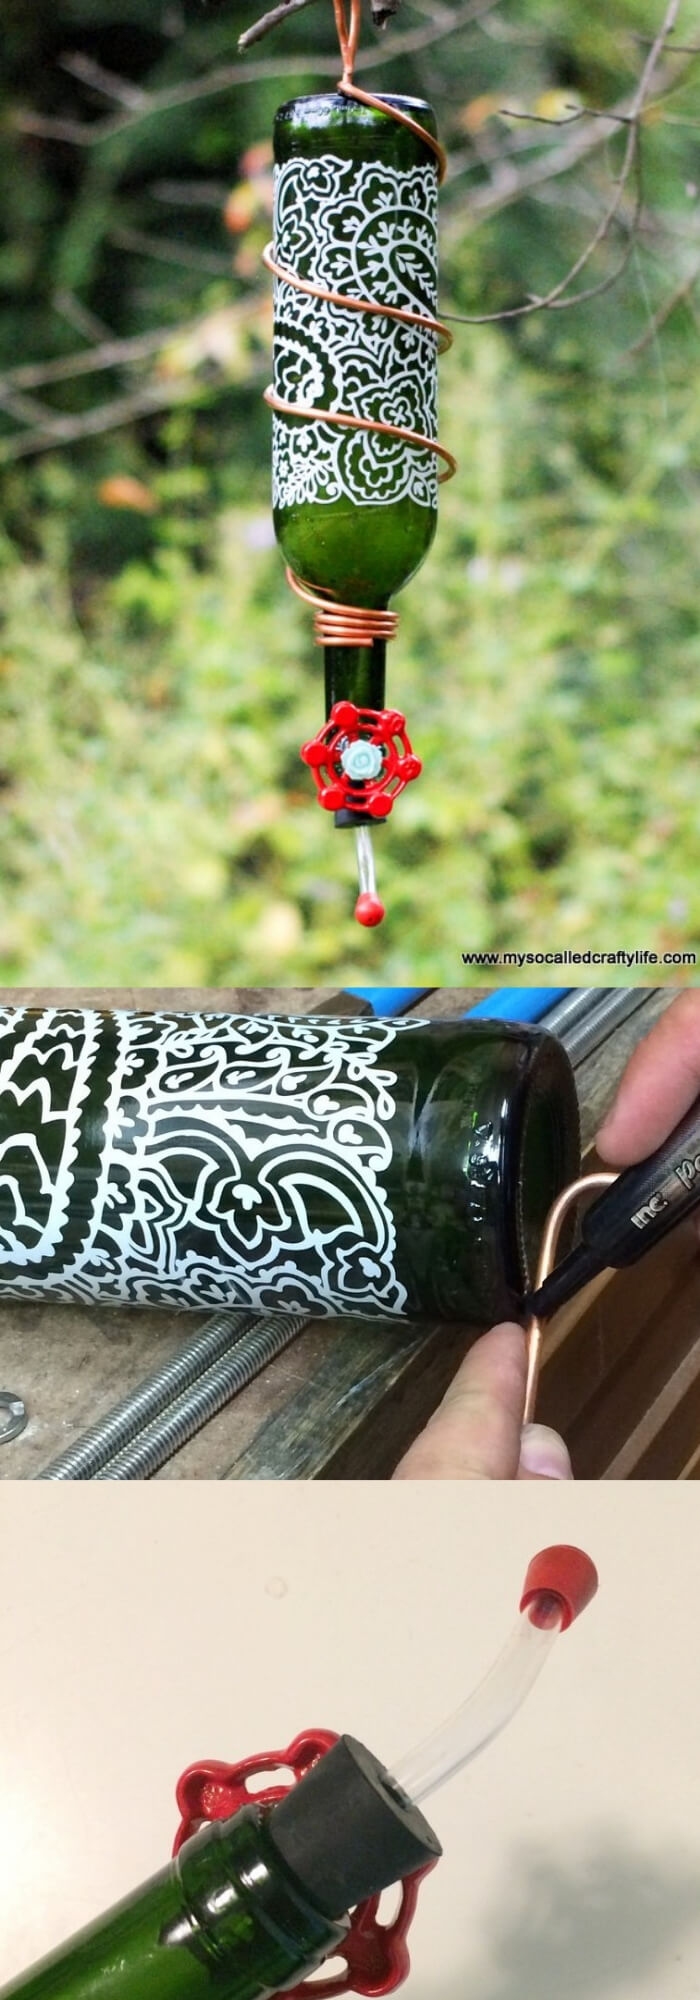 DIY Wine Bottle Hummingbird Feeder